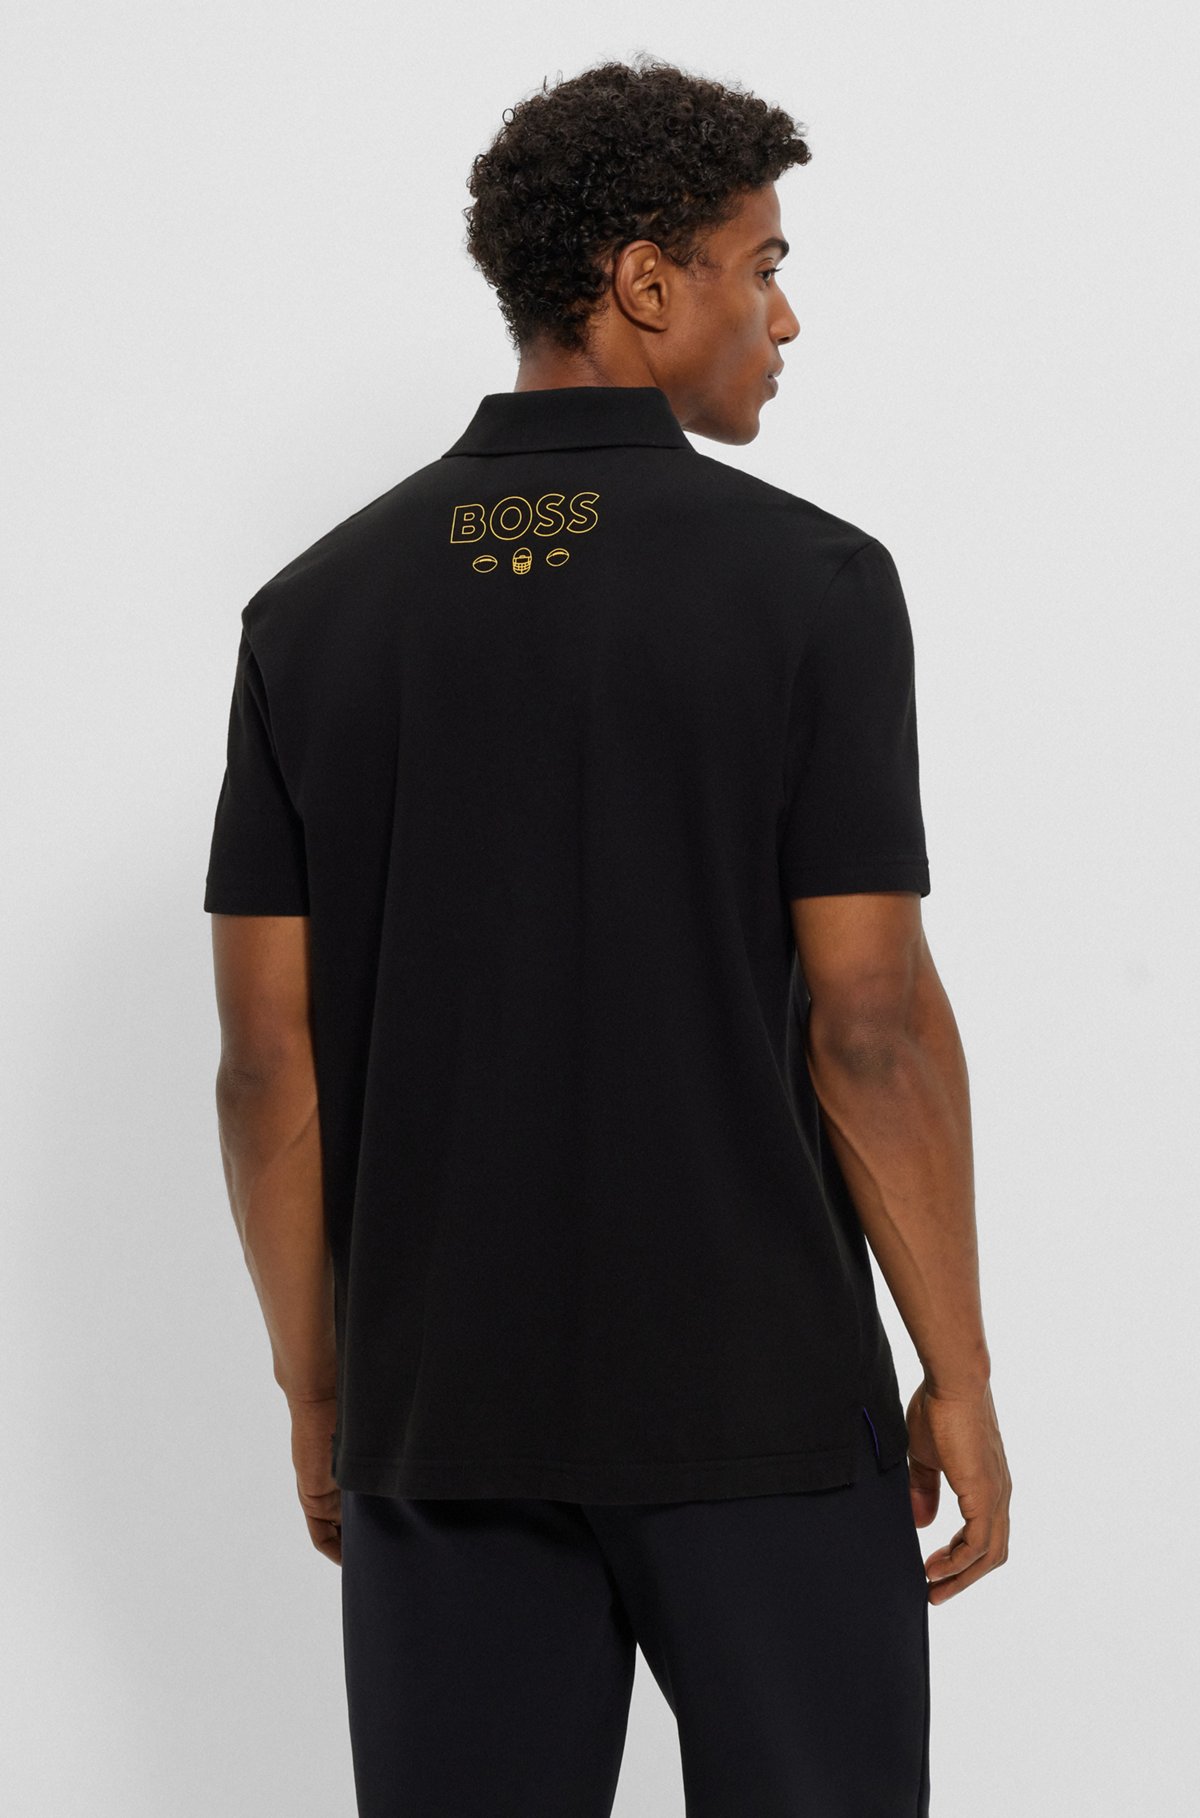 BOSS x NFL cotton-piqué polo shirt with collaborative branding, Vikings